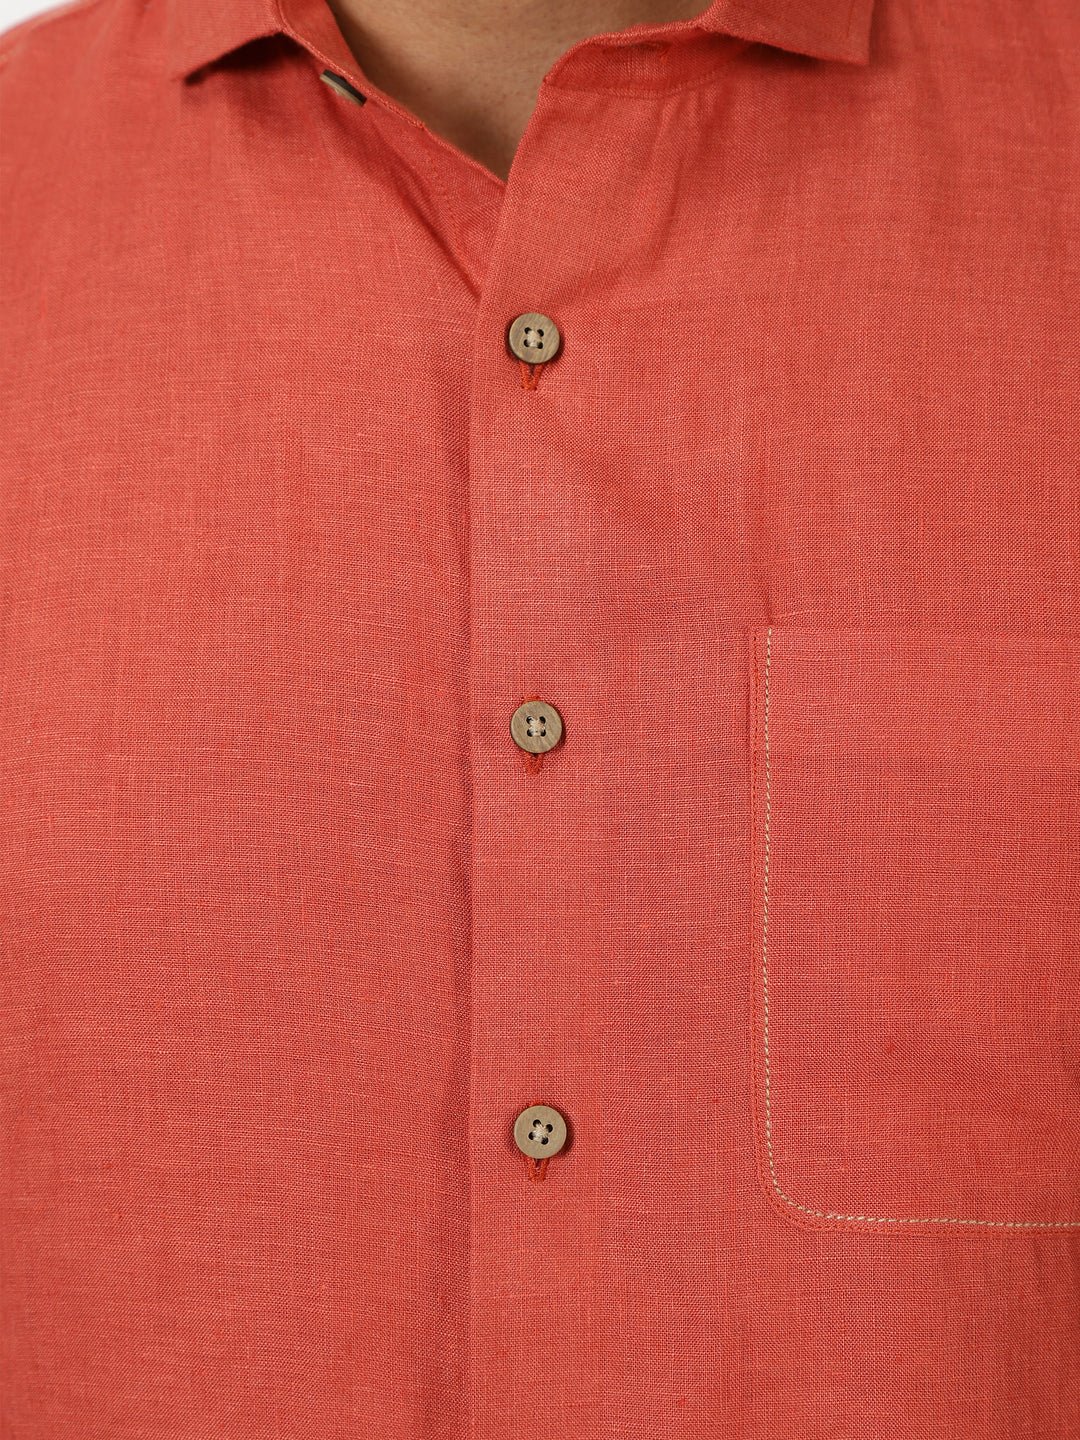 Charles - Pure Linen Half Sleeve Shirt - Saffron Red